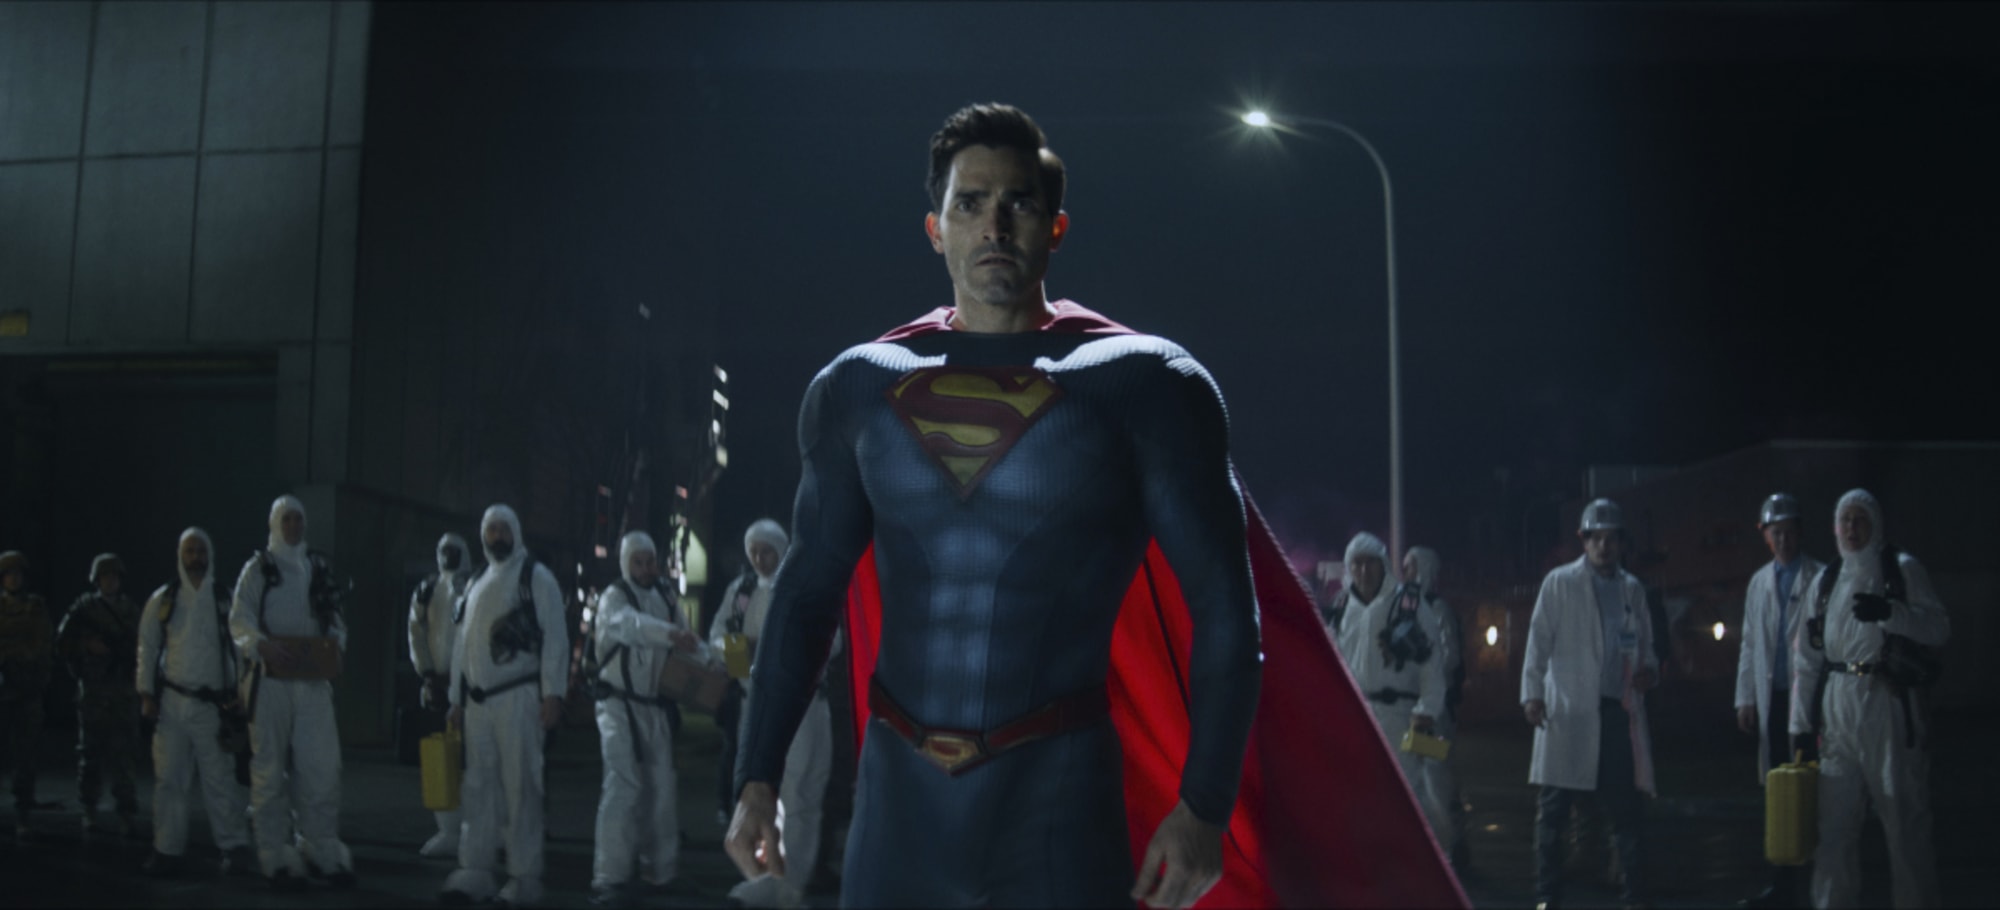 Watch Superman and Lois season 1, episode 2 trailer